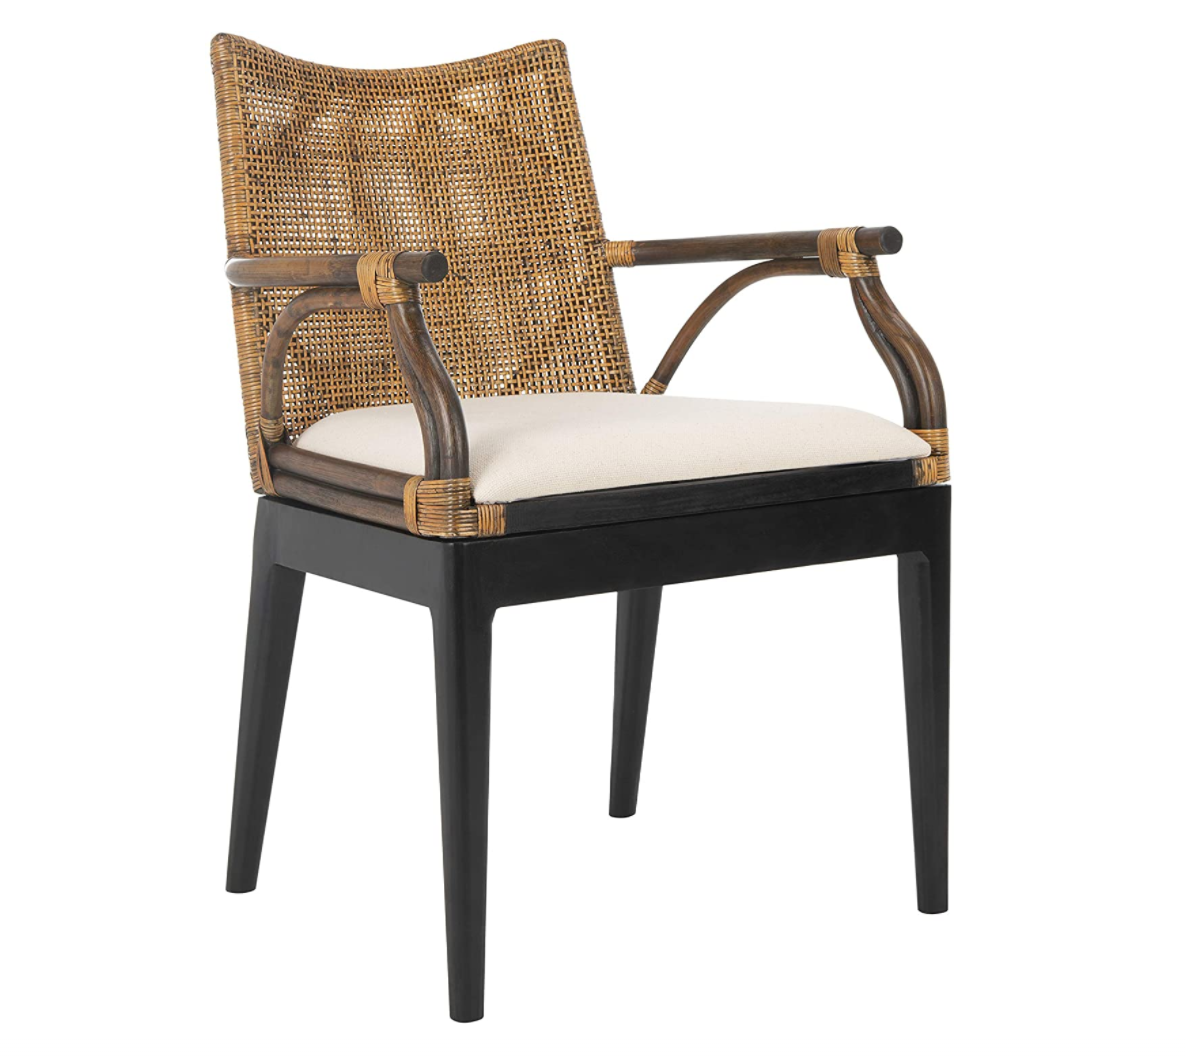 Safavieh Rattan Woven Arm Chair, Amazon